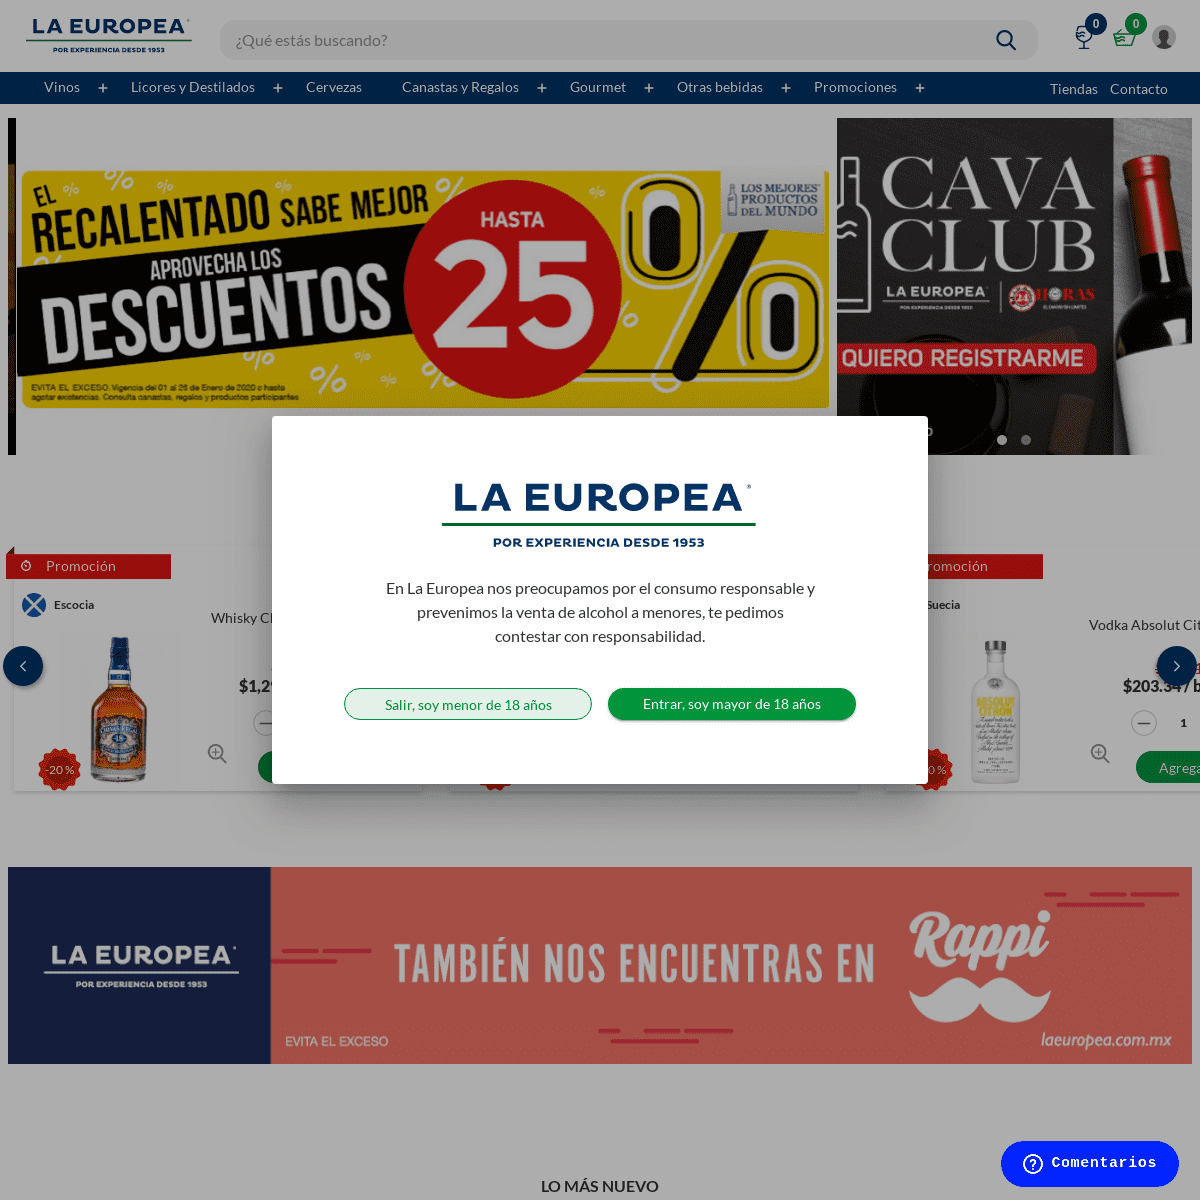 A complete backup of laeuropea.com.mx